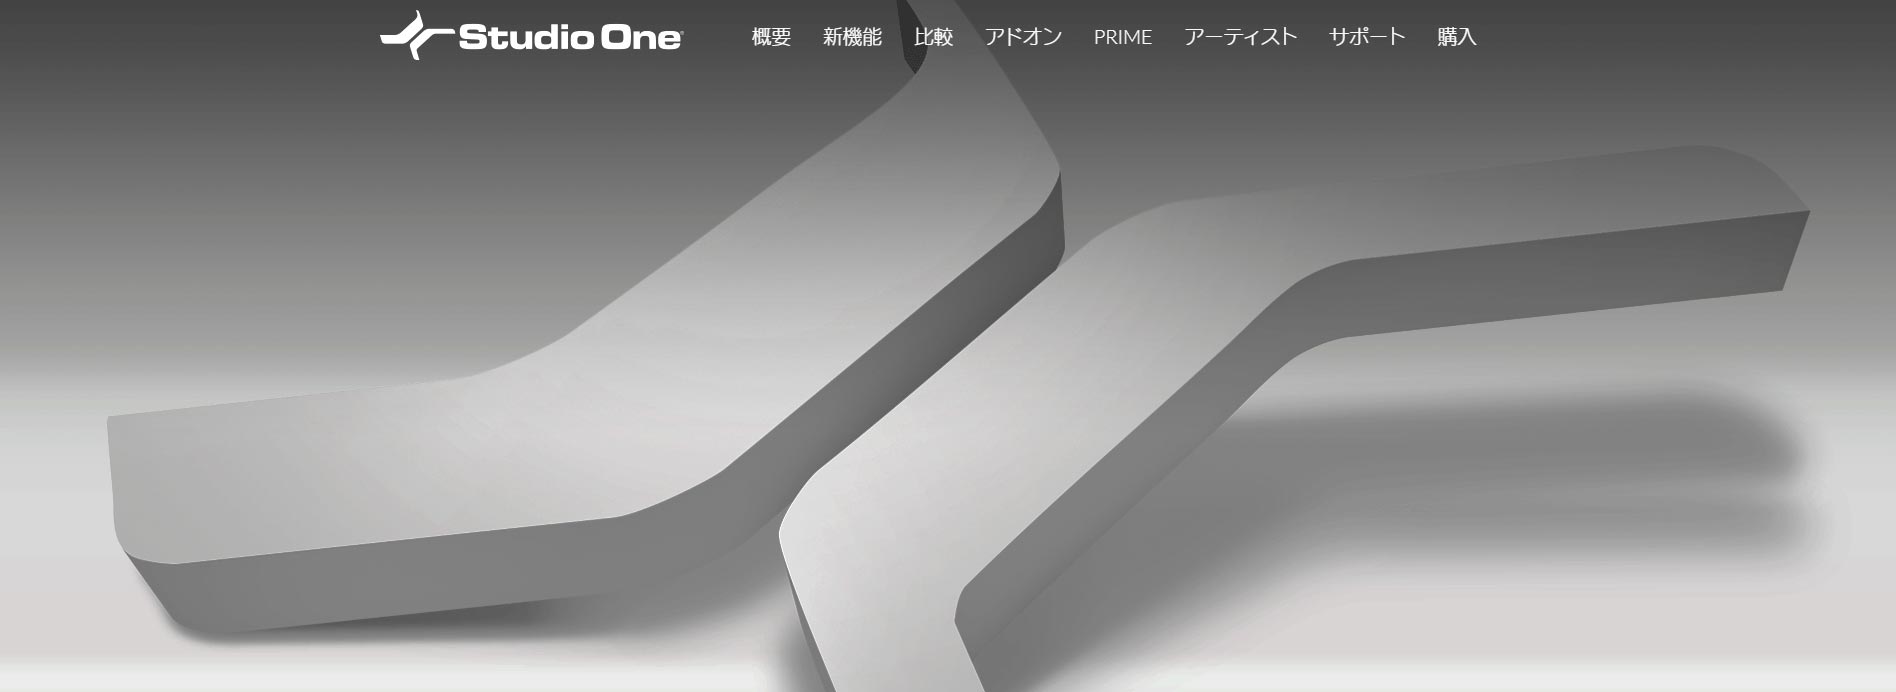 Studio One 公式サイト イメージ